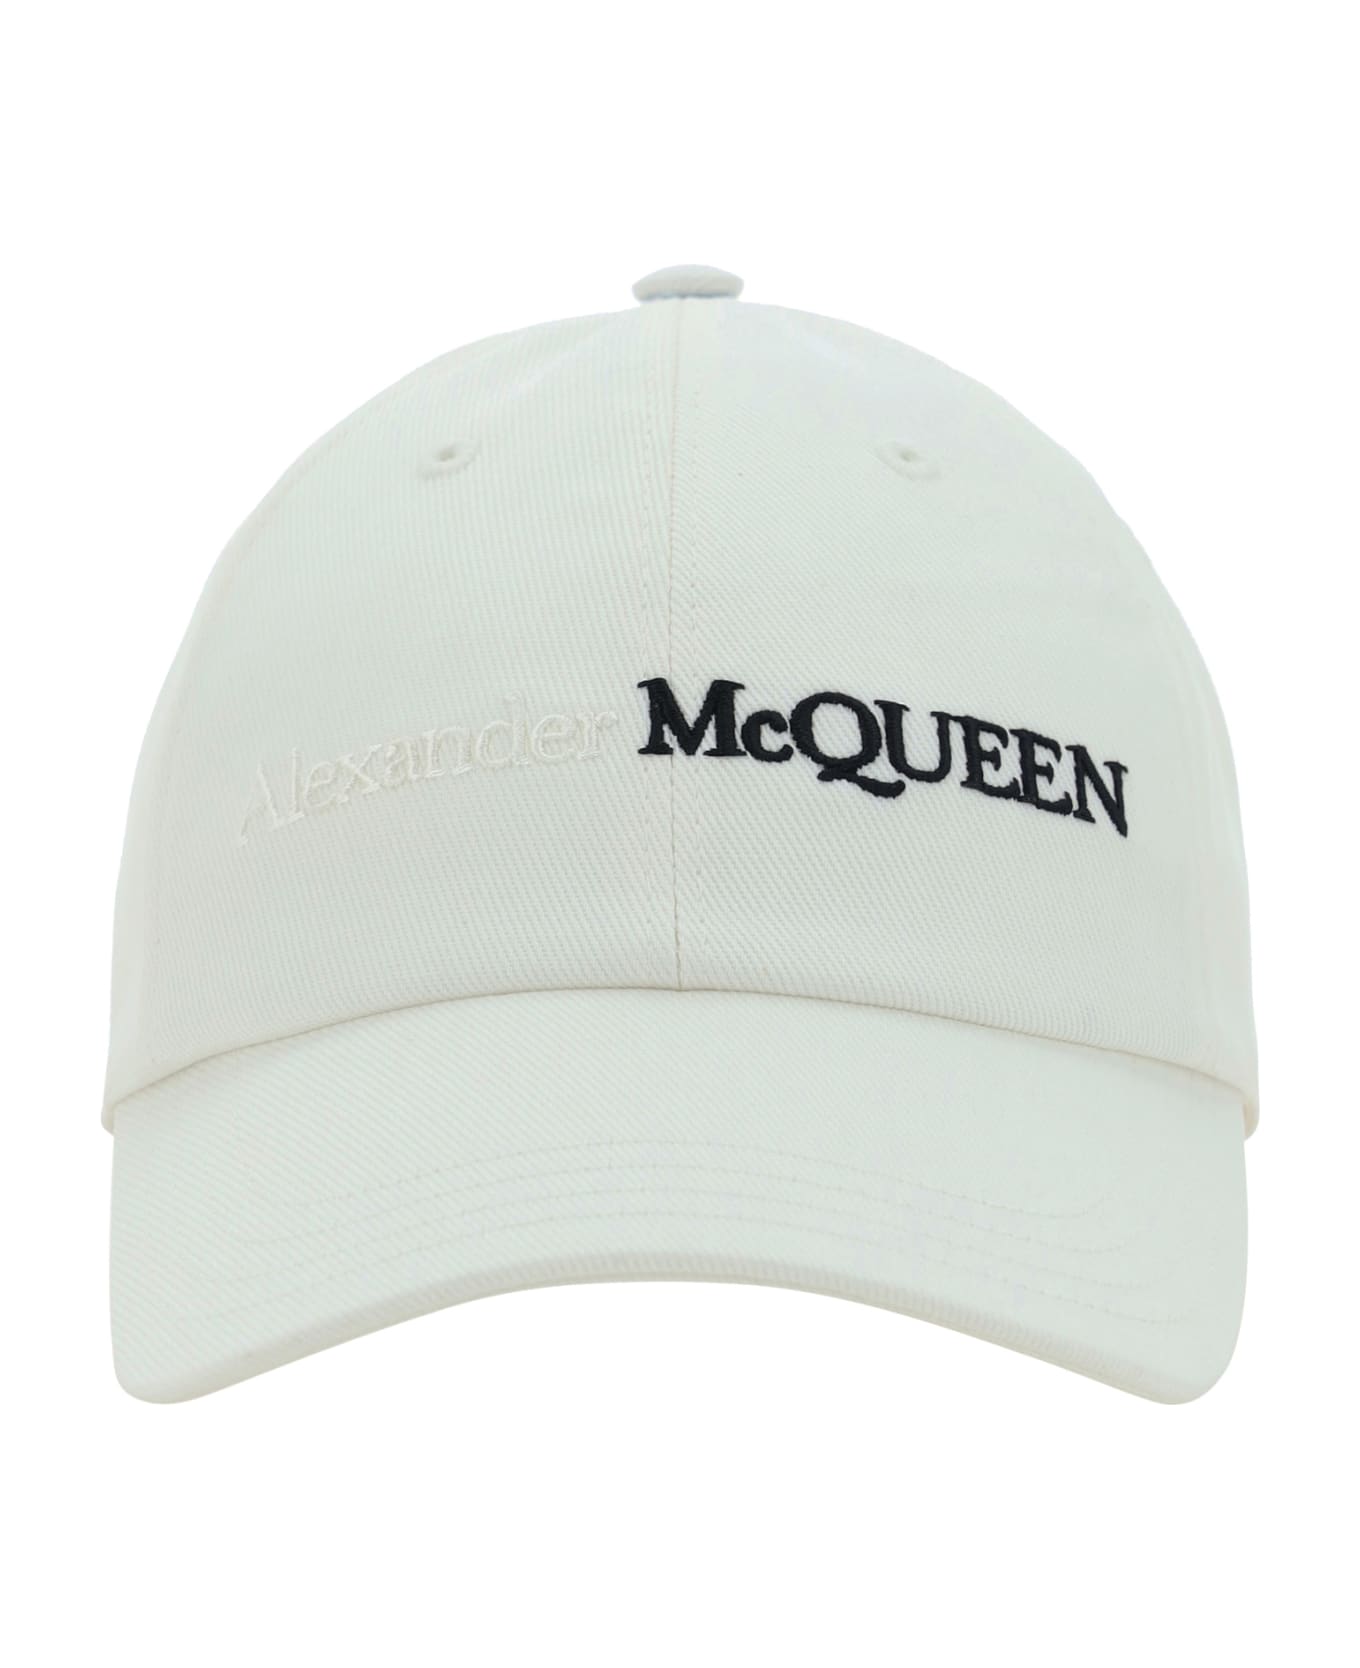 Alexander McQueen Logo Embroidered Baseball Cap - White/black